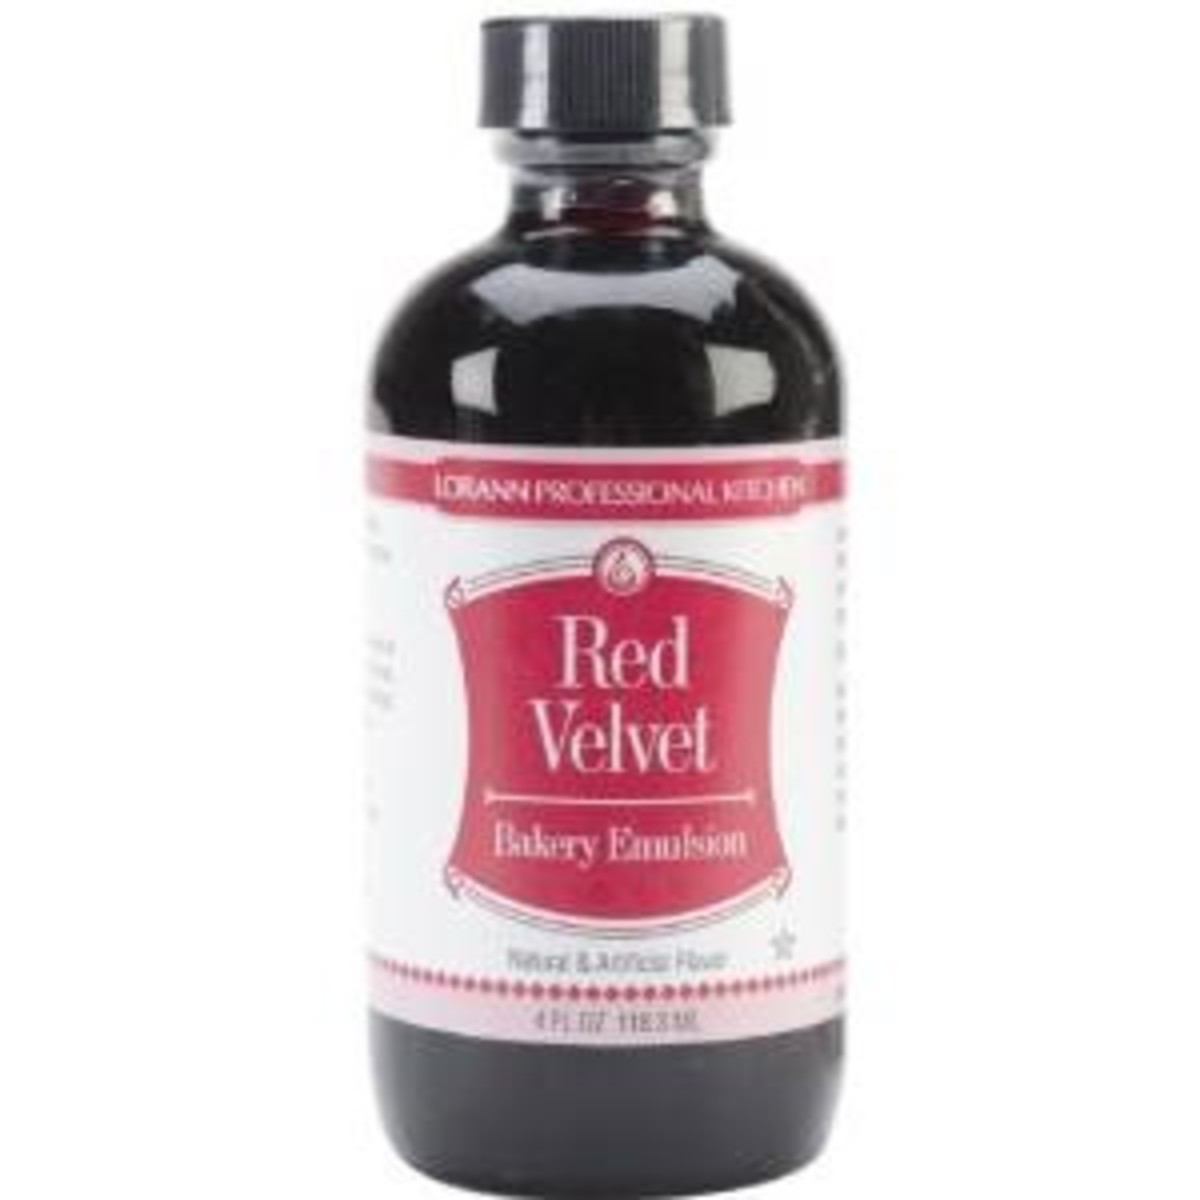 A bottle of red velvet flavoring